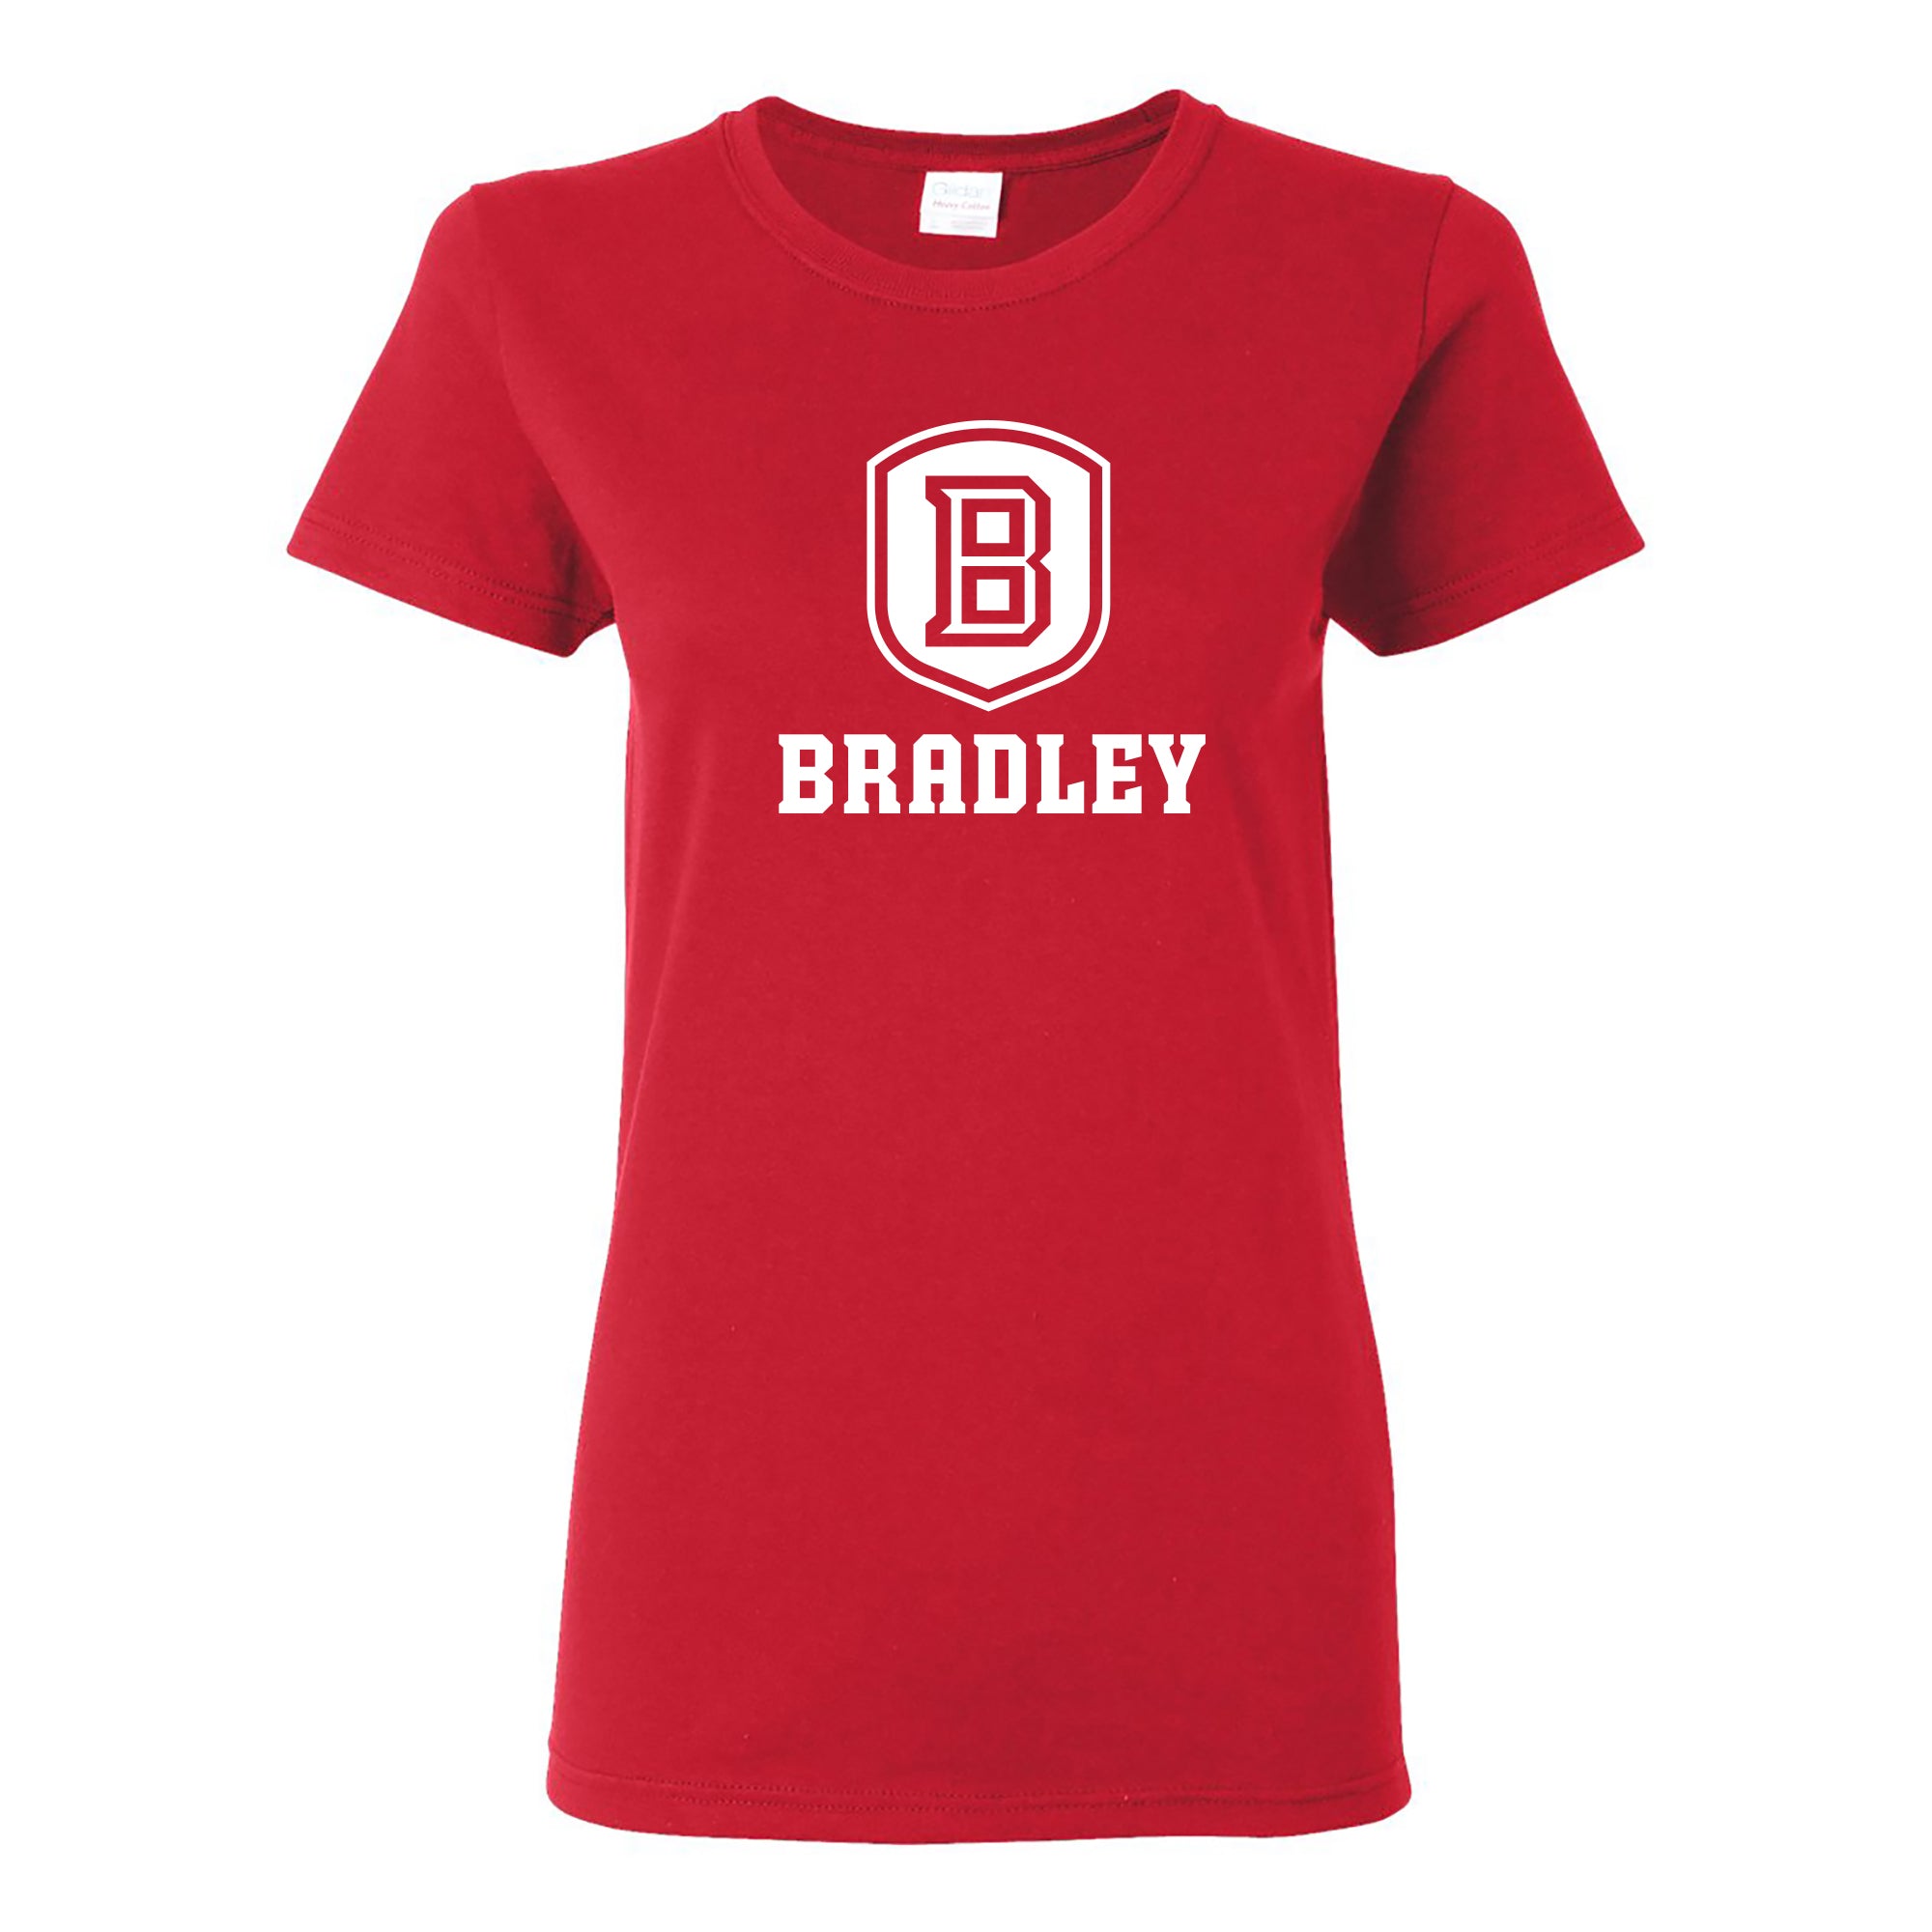 Buffalo Braves Crew Neck Unisex Pre Shrunk Cotton T-shirt 